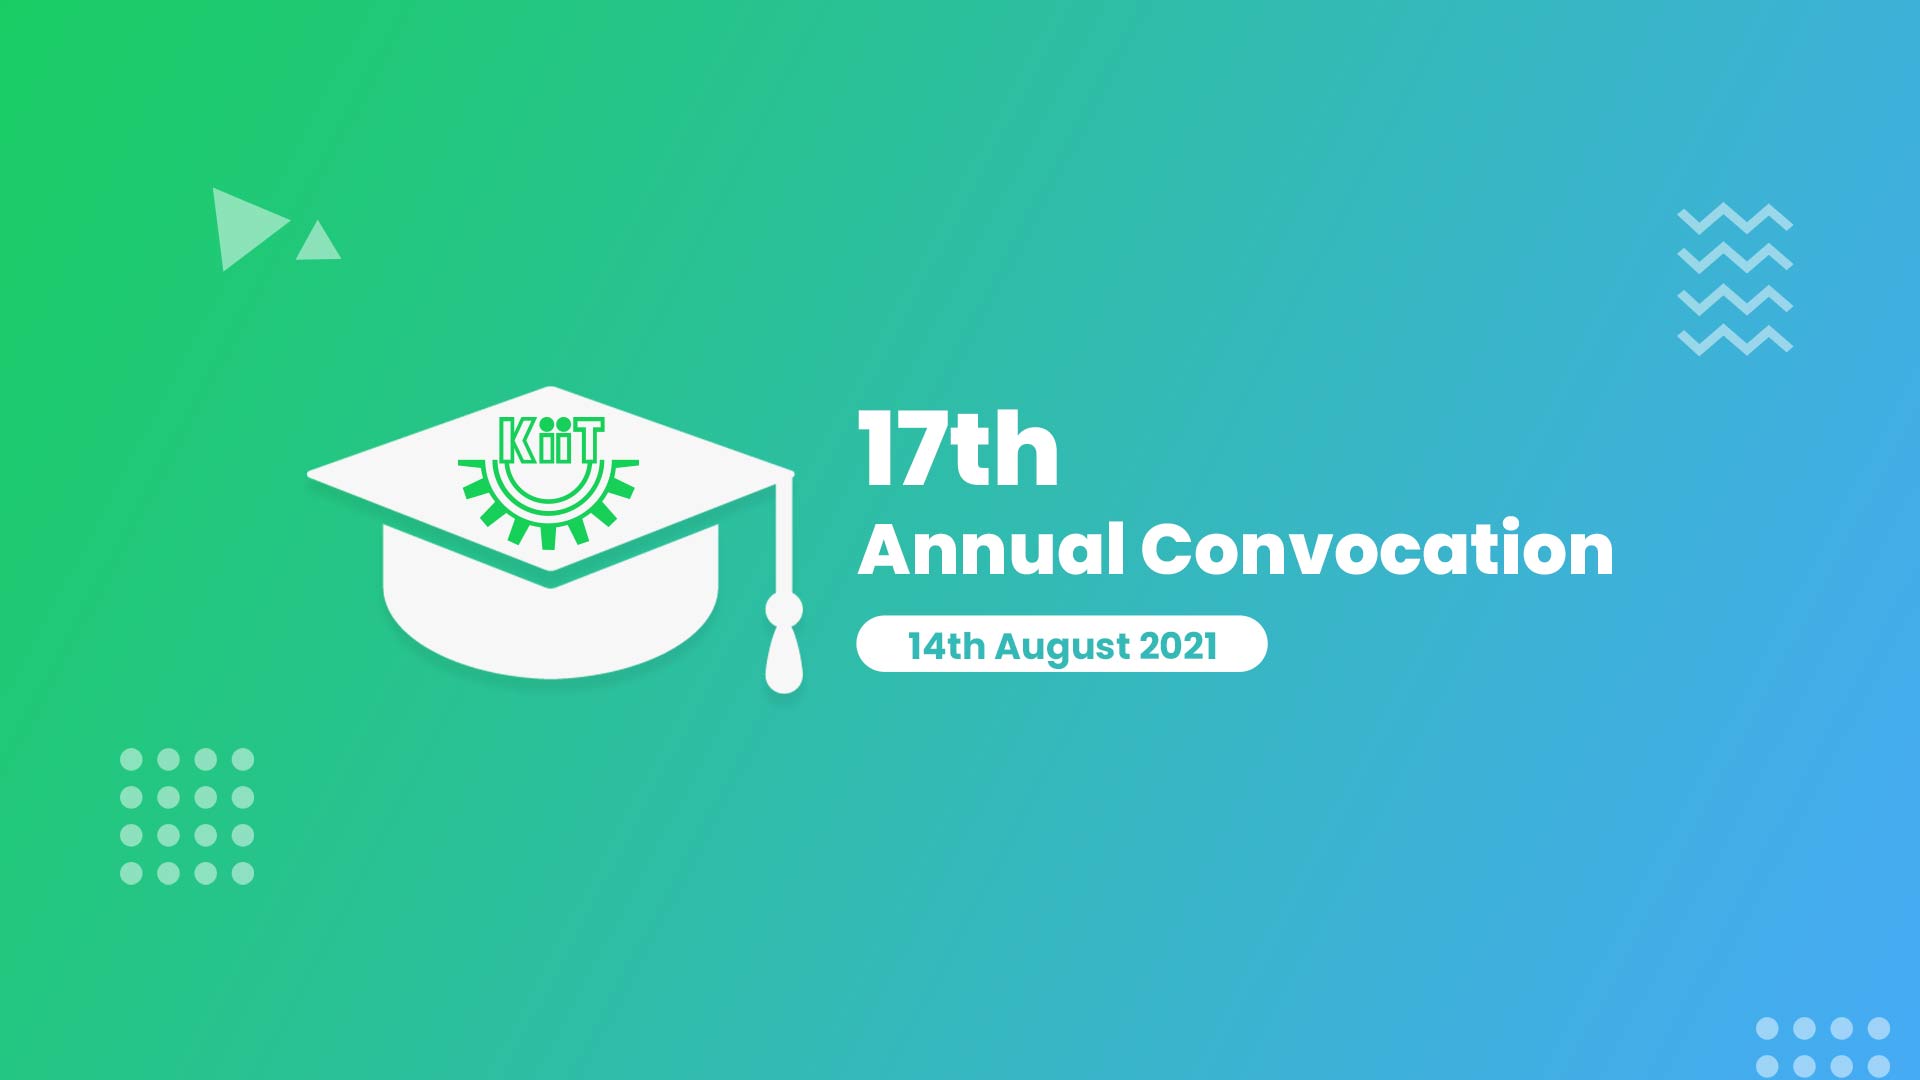 KIIT 17th Annual Convocation